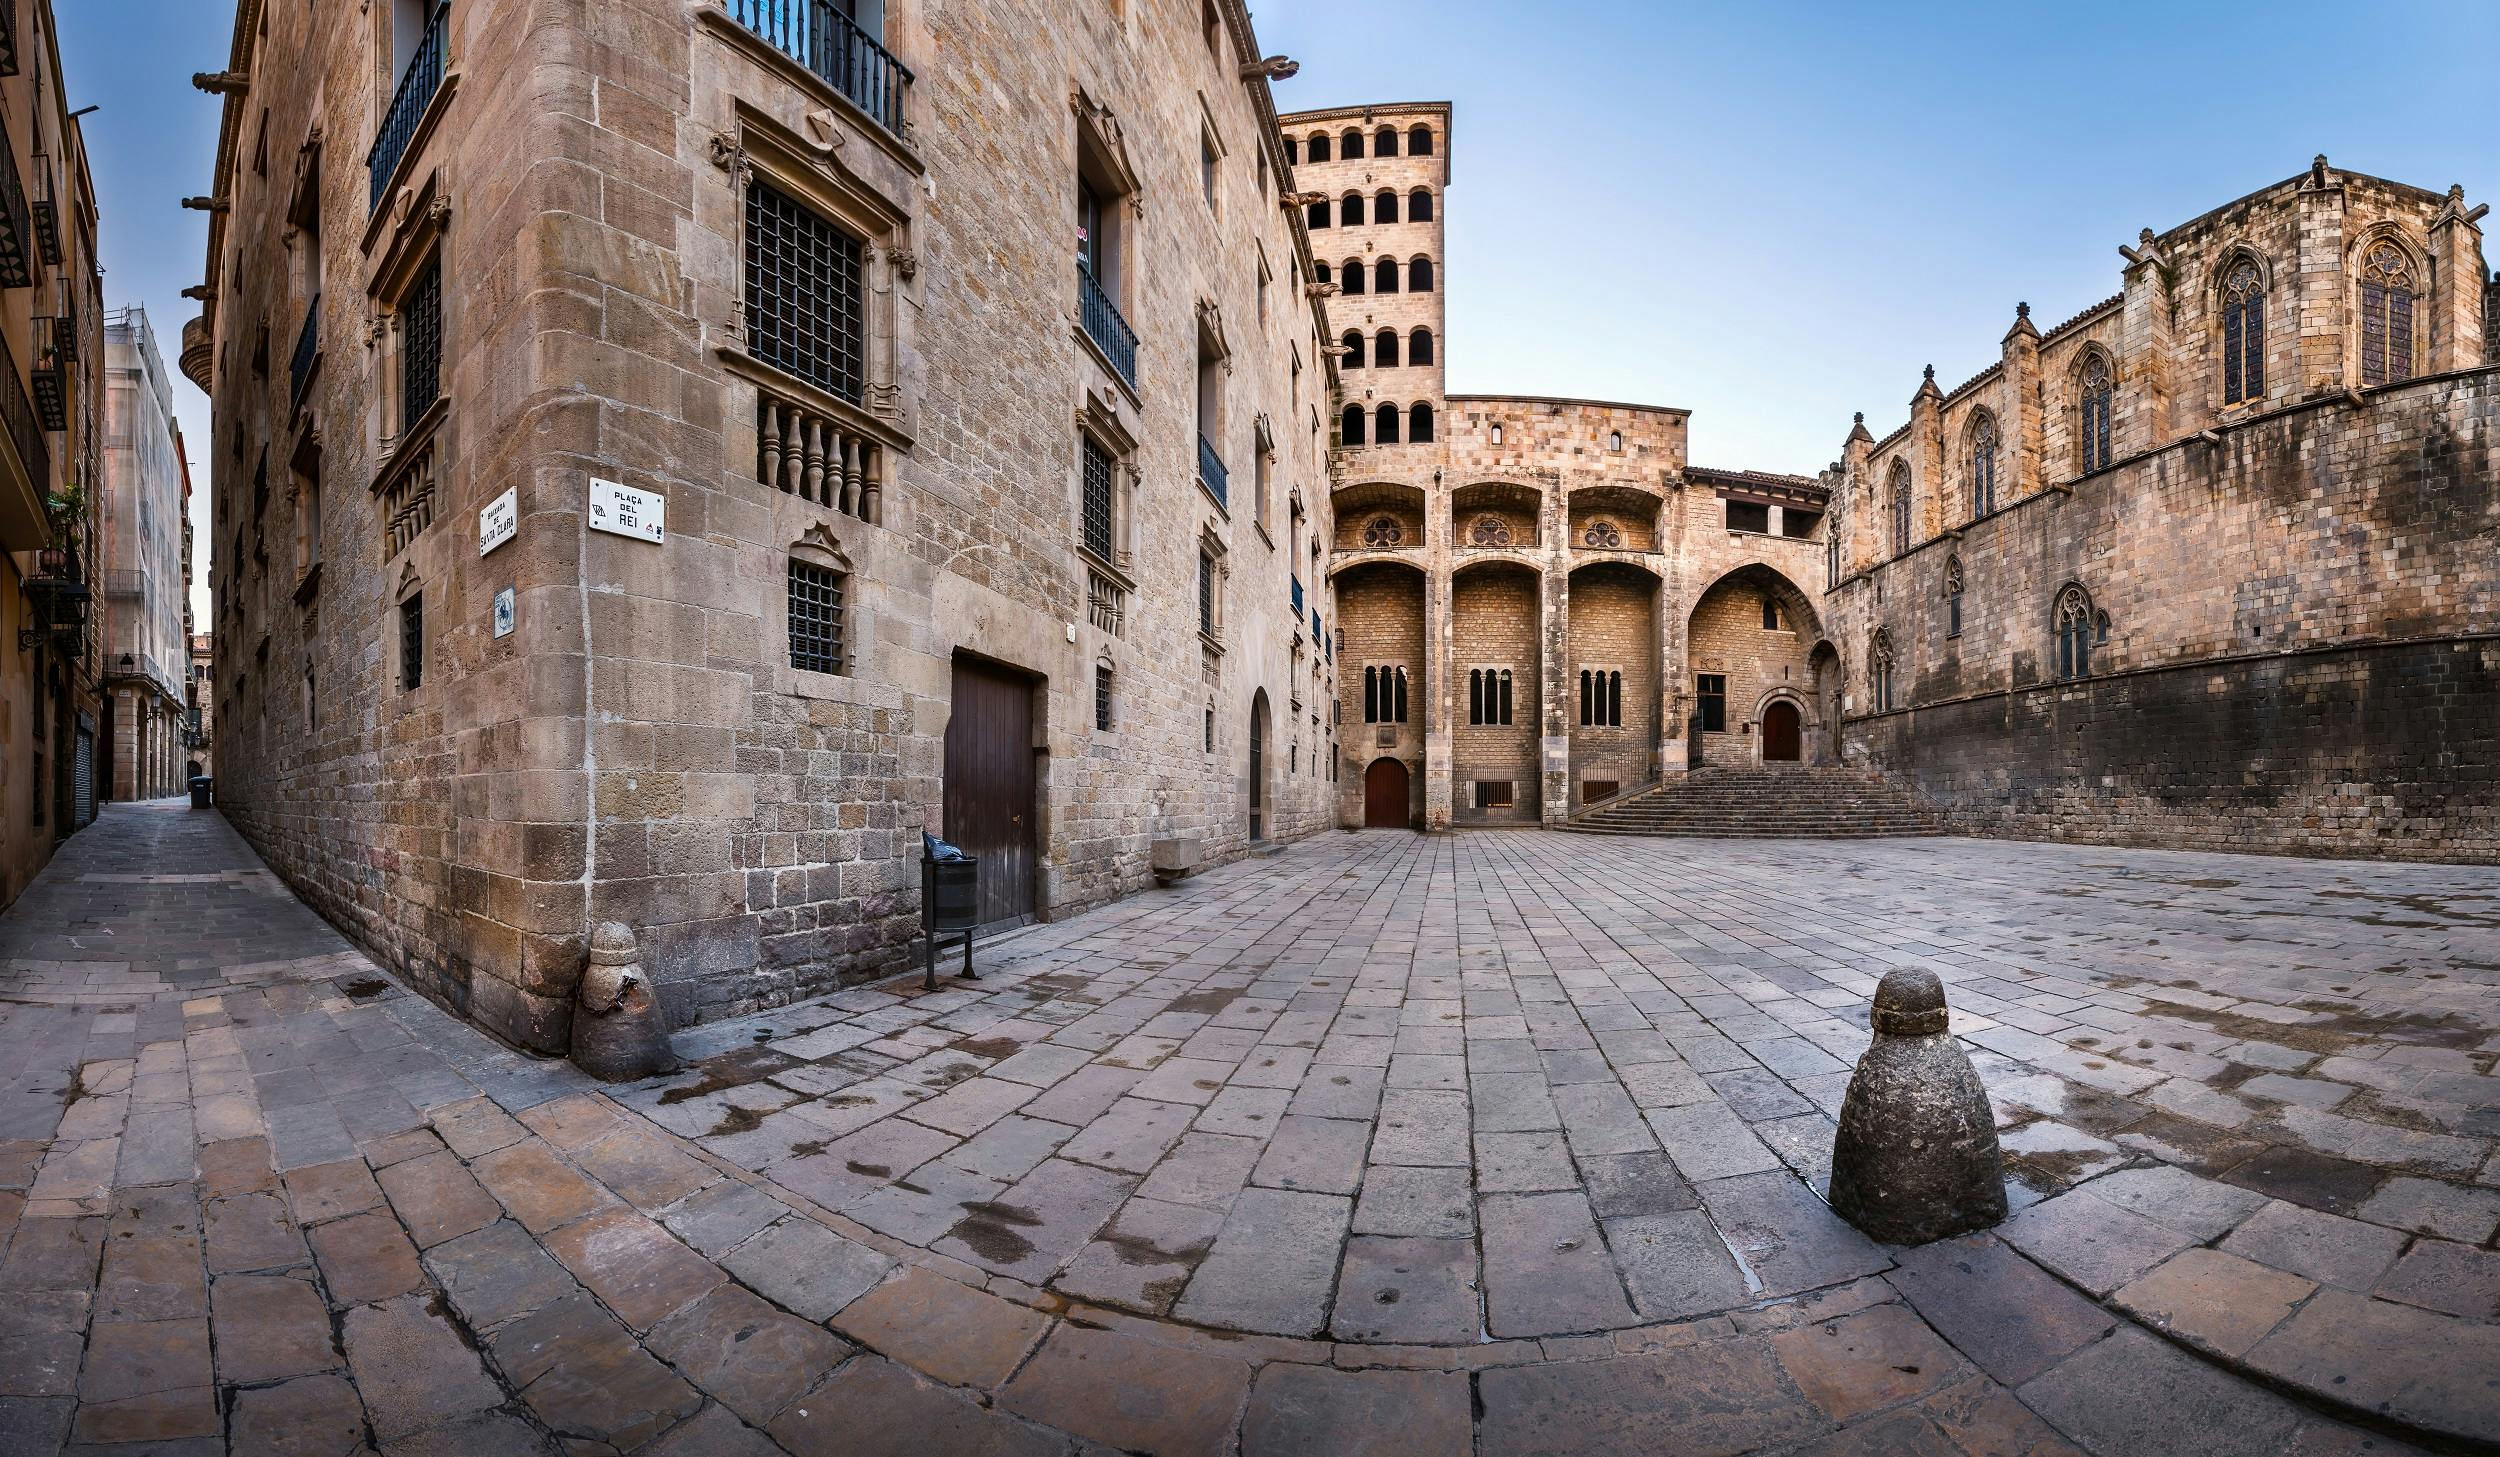 Barcelona: visita guiada do gótico ao moderno